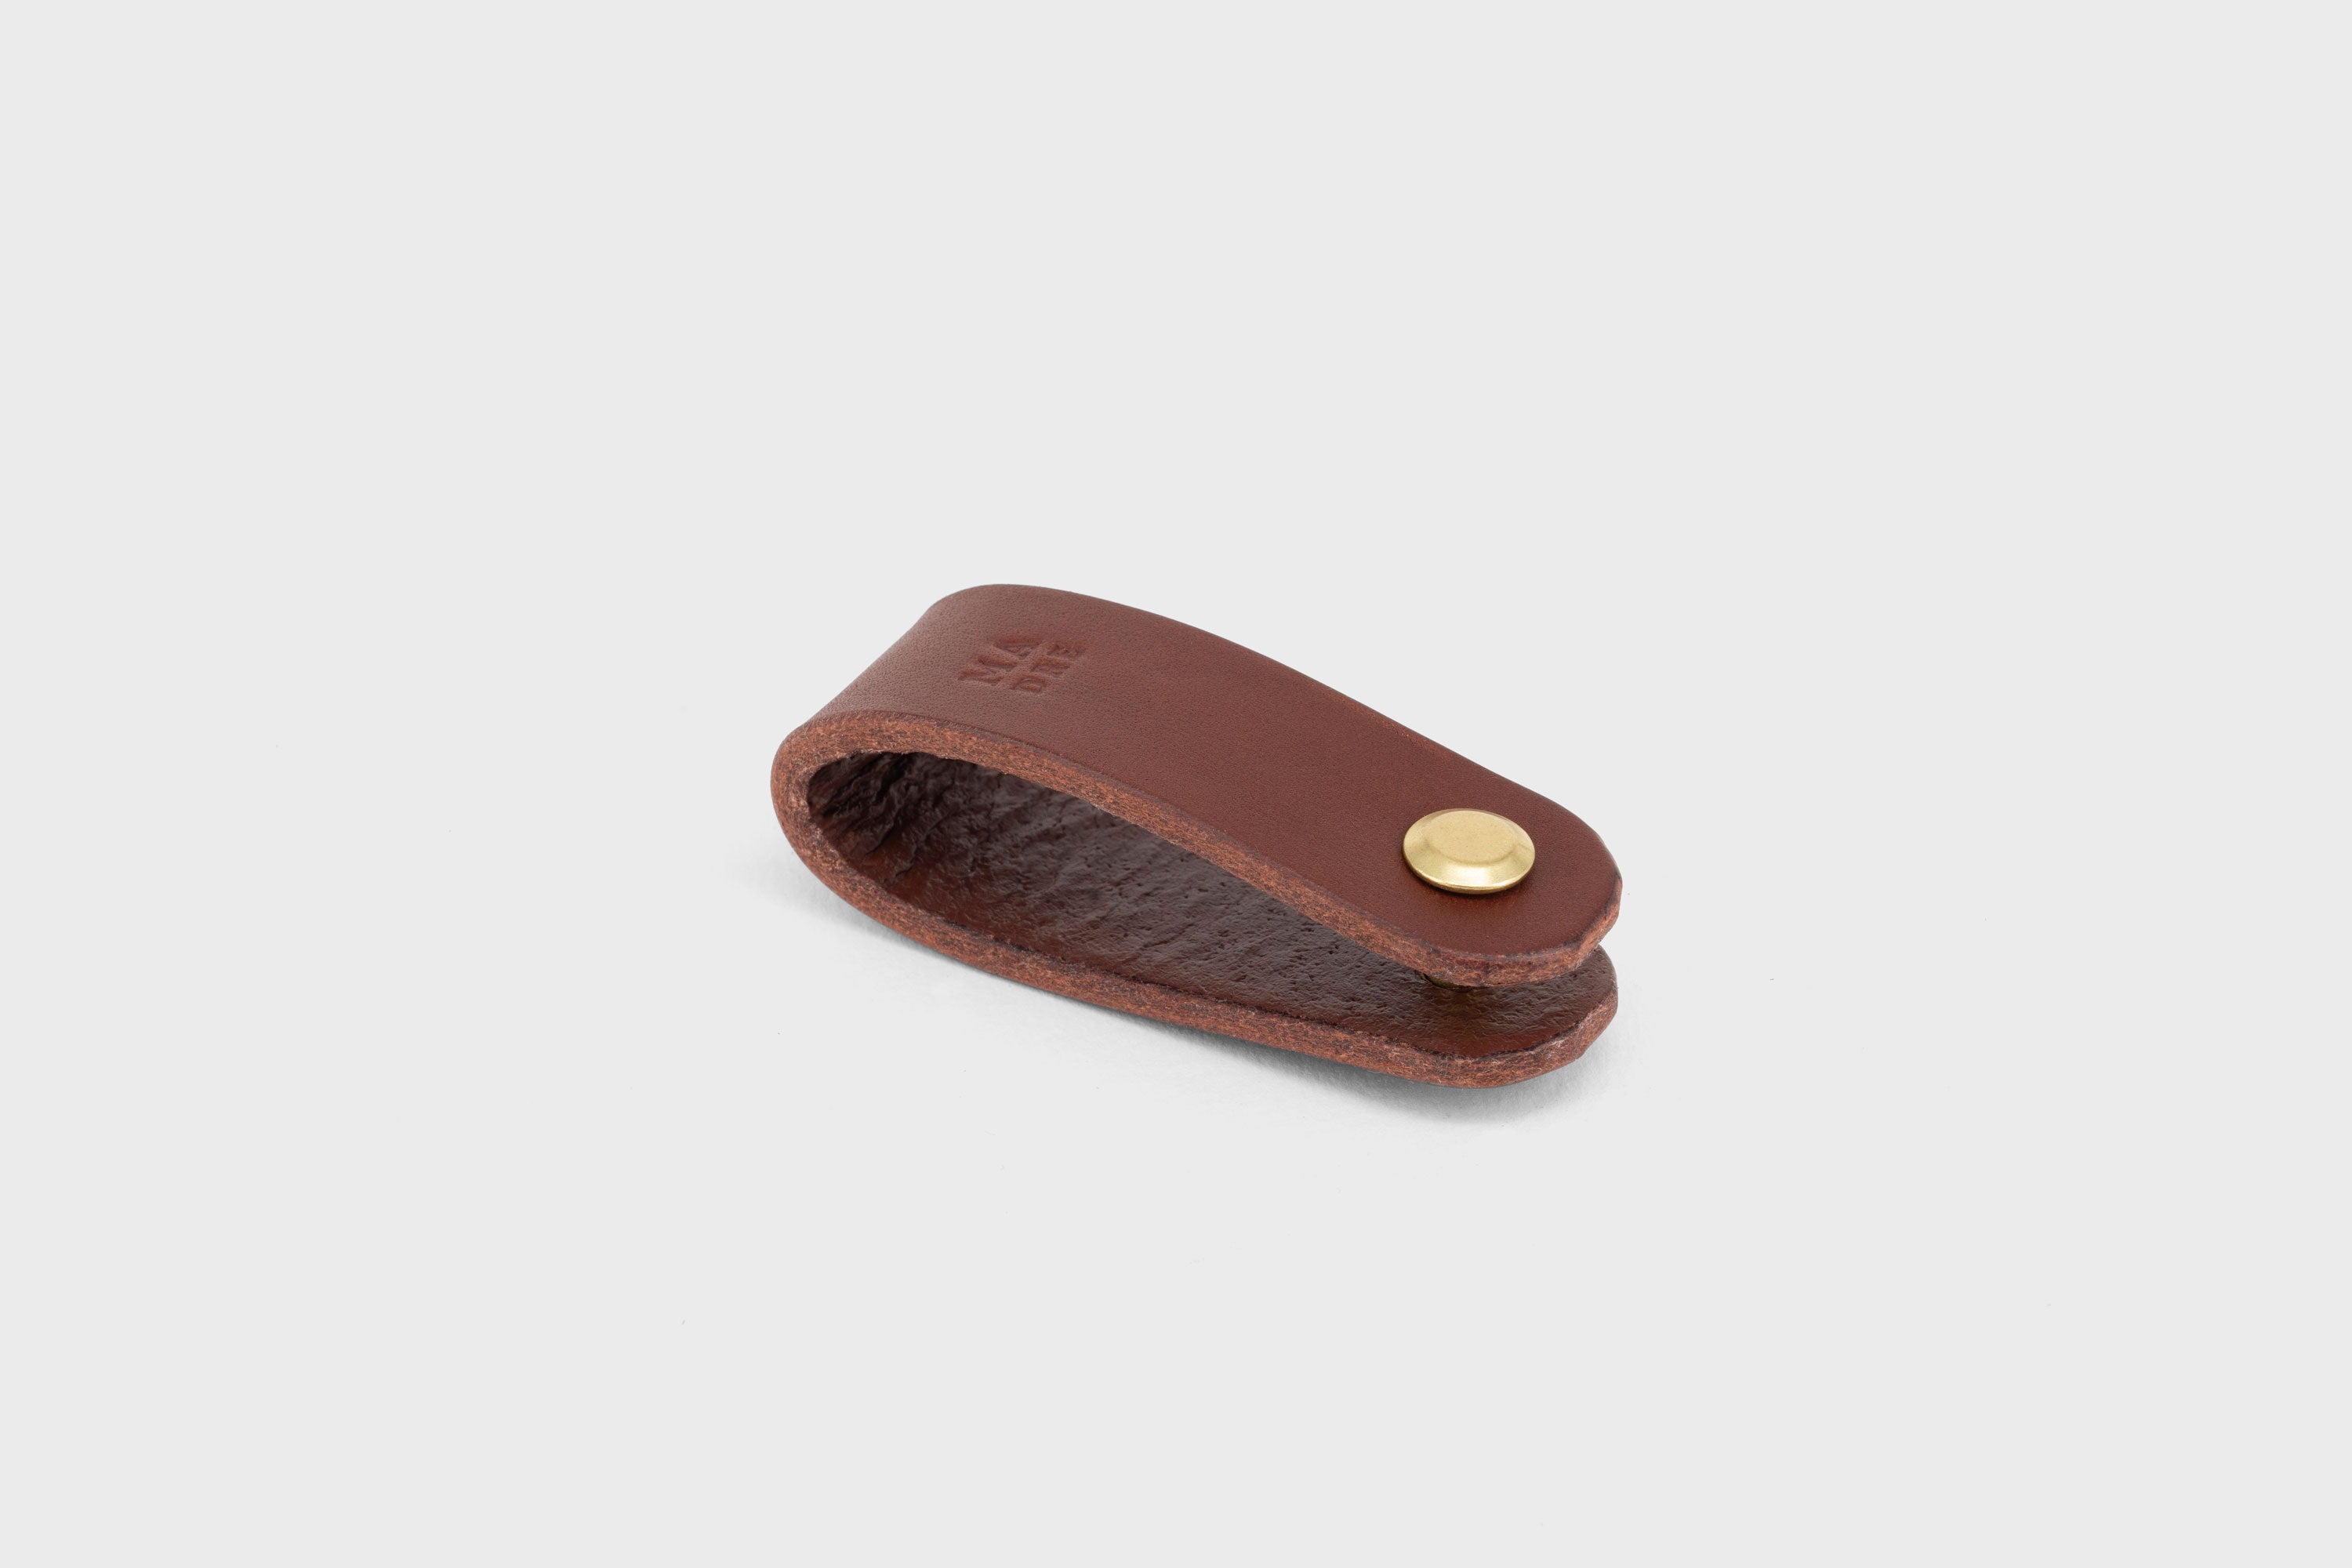 Key Ring Holder Case Dark Brown Leather Minimalist Design Premium Quality Atelier Madre Manuel Dreesmann Barcelona Spain